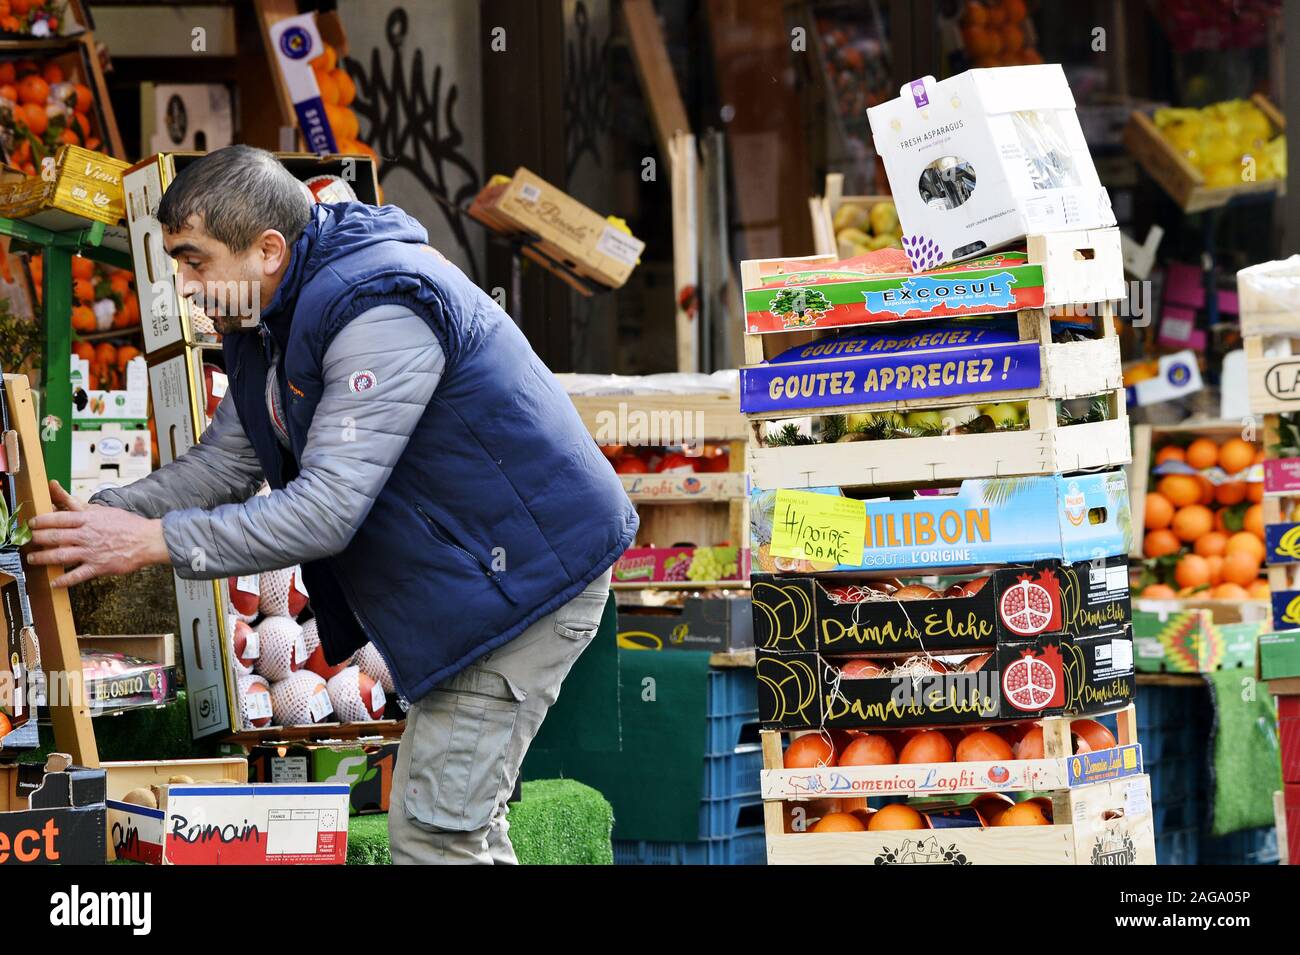 Fruit seller display - Paris - France Stock Photo